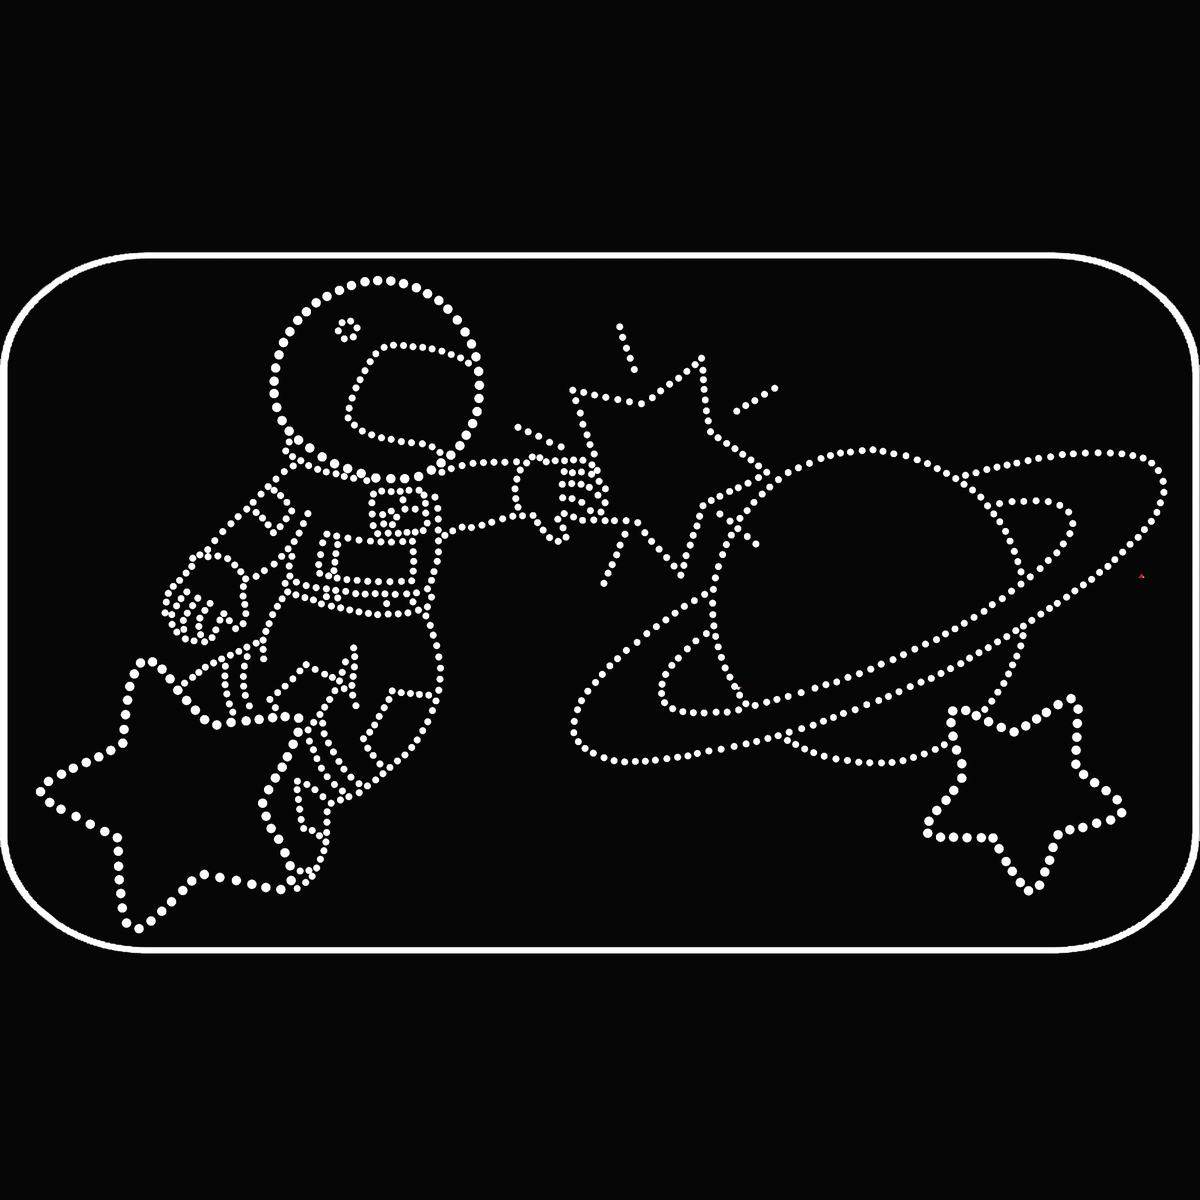 Spaceman & Planet - ichalk-arted